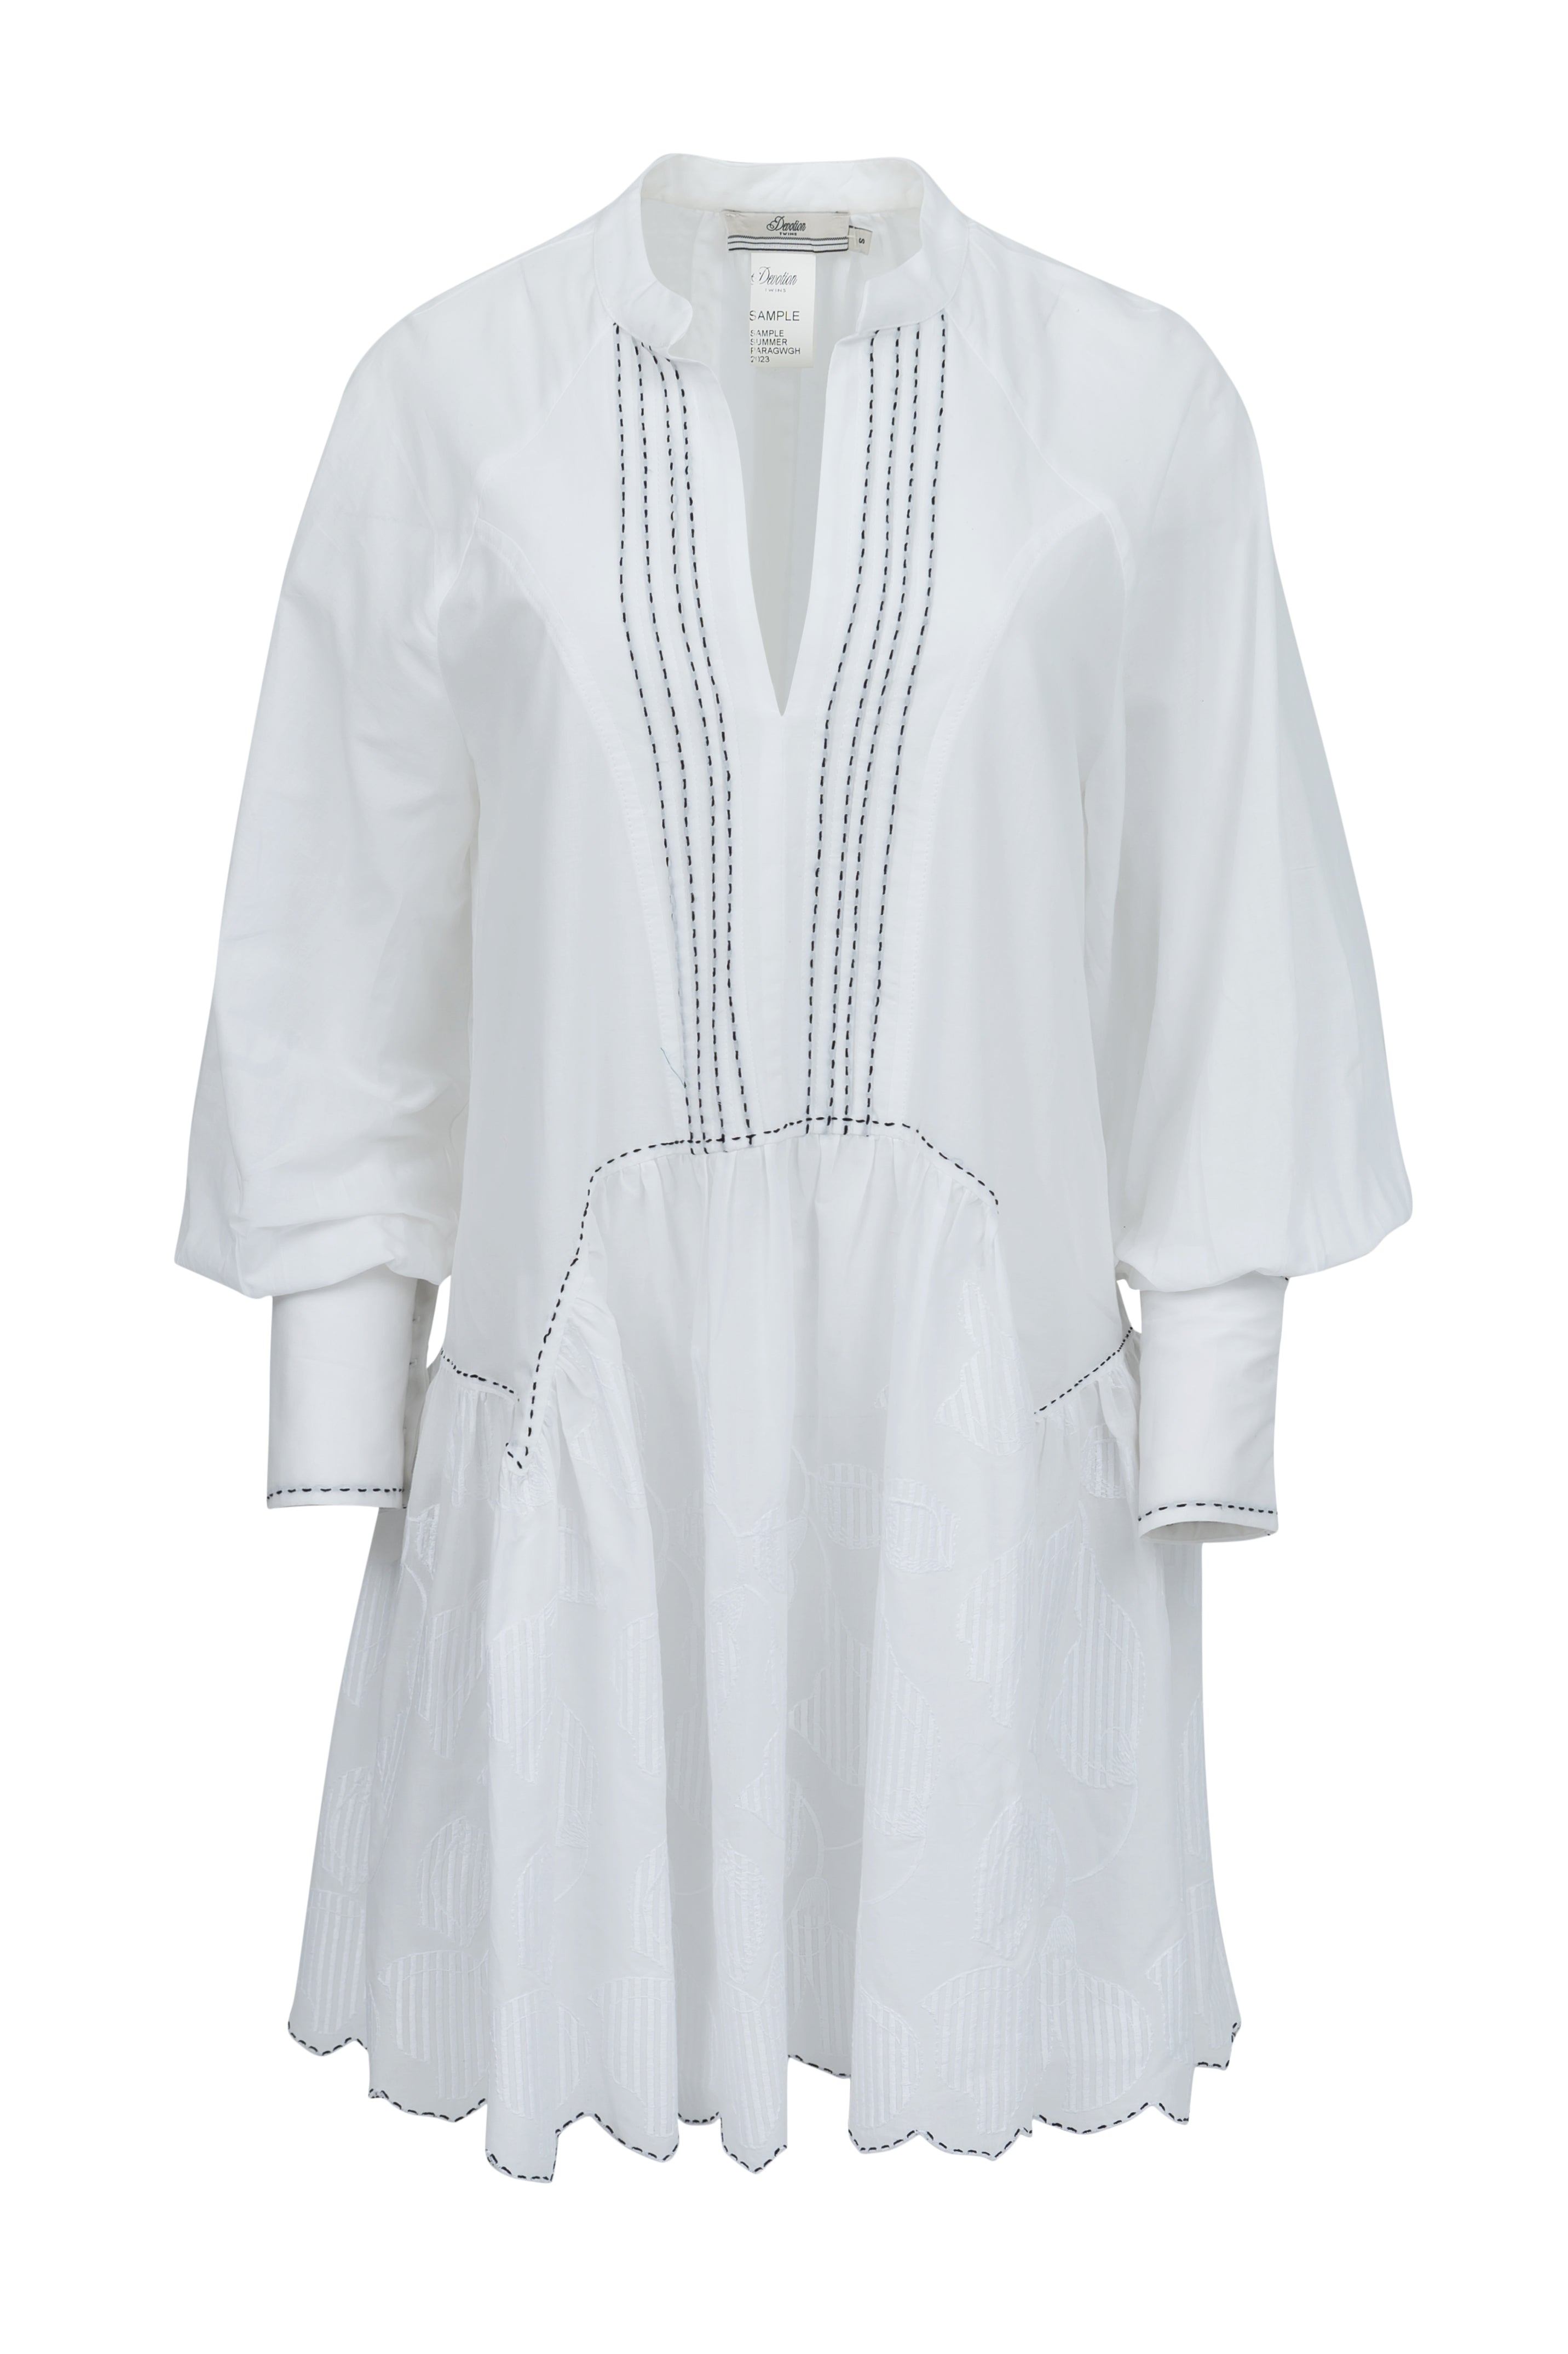 Devotion Twins - White Elephantodoto dress